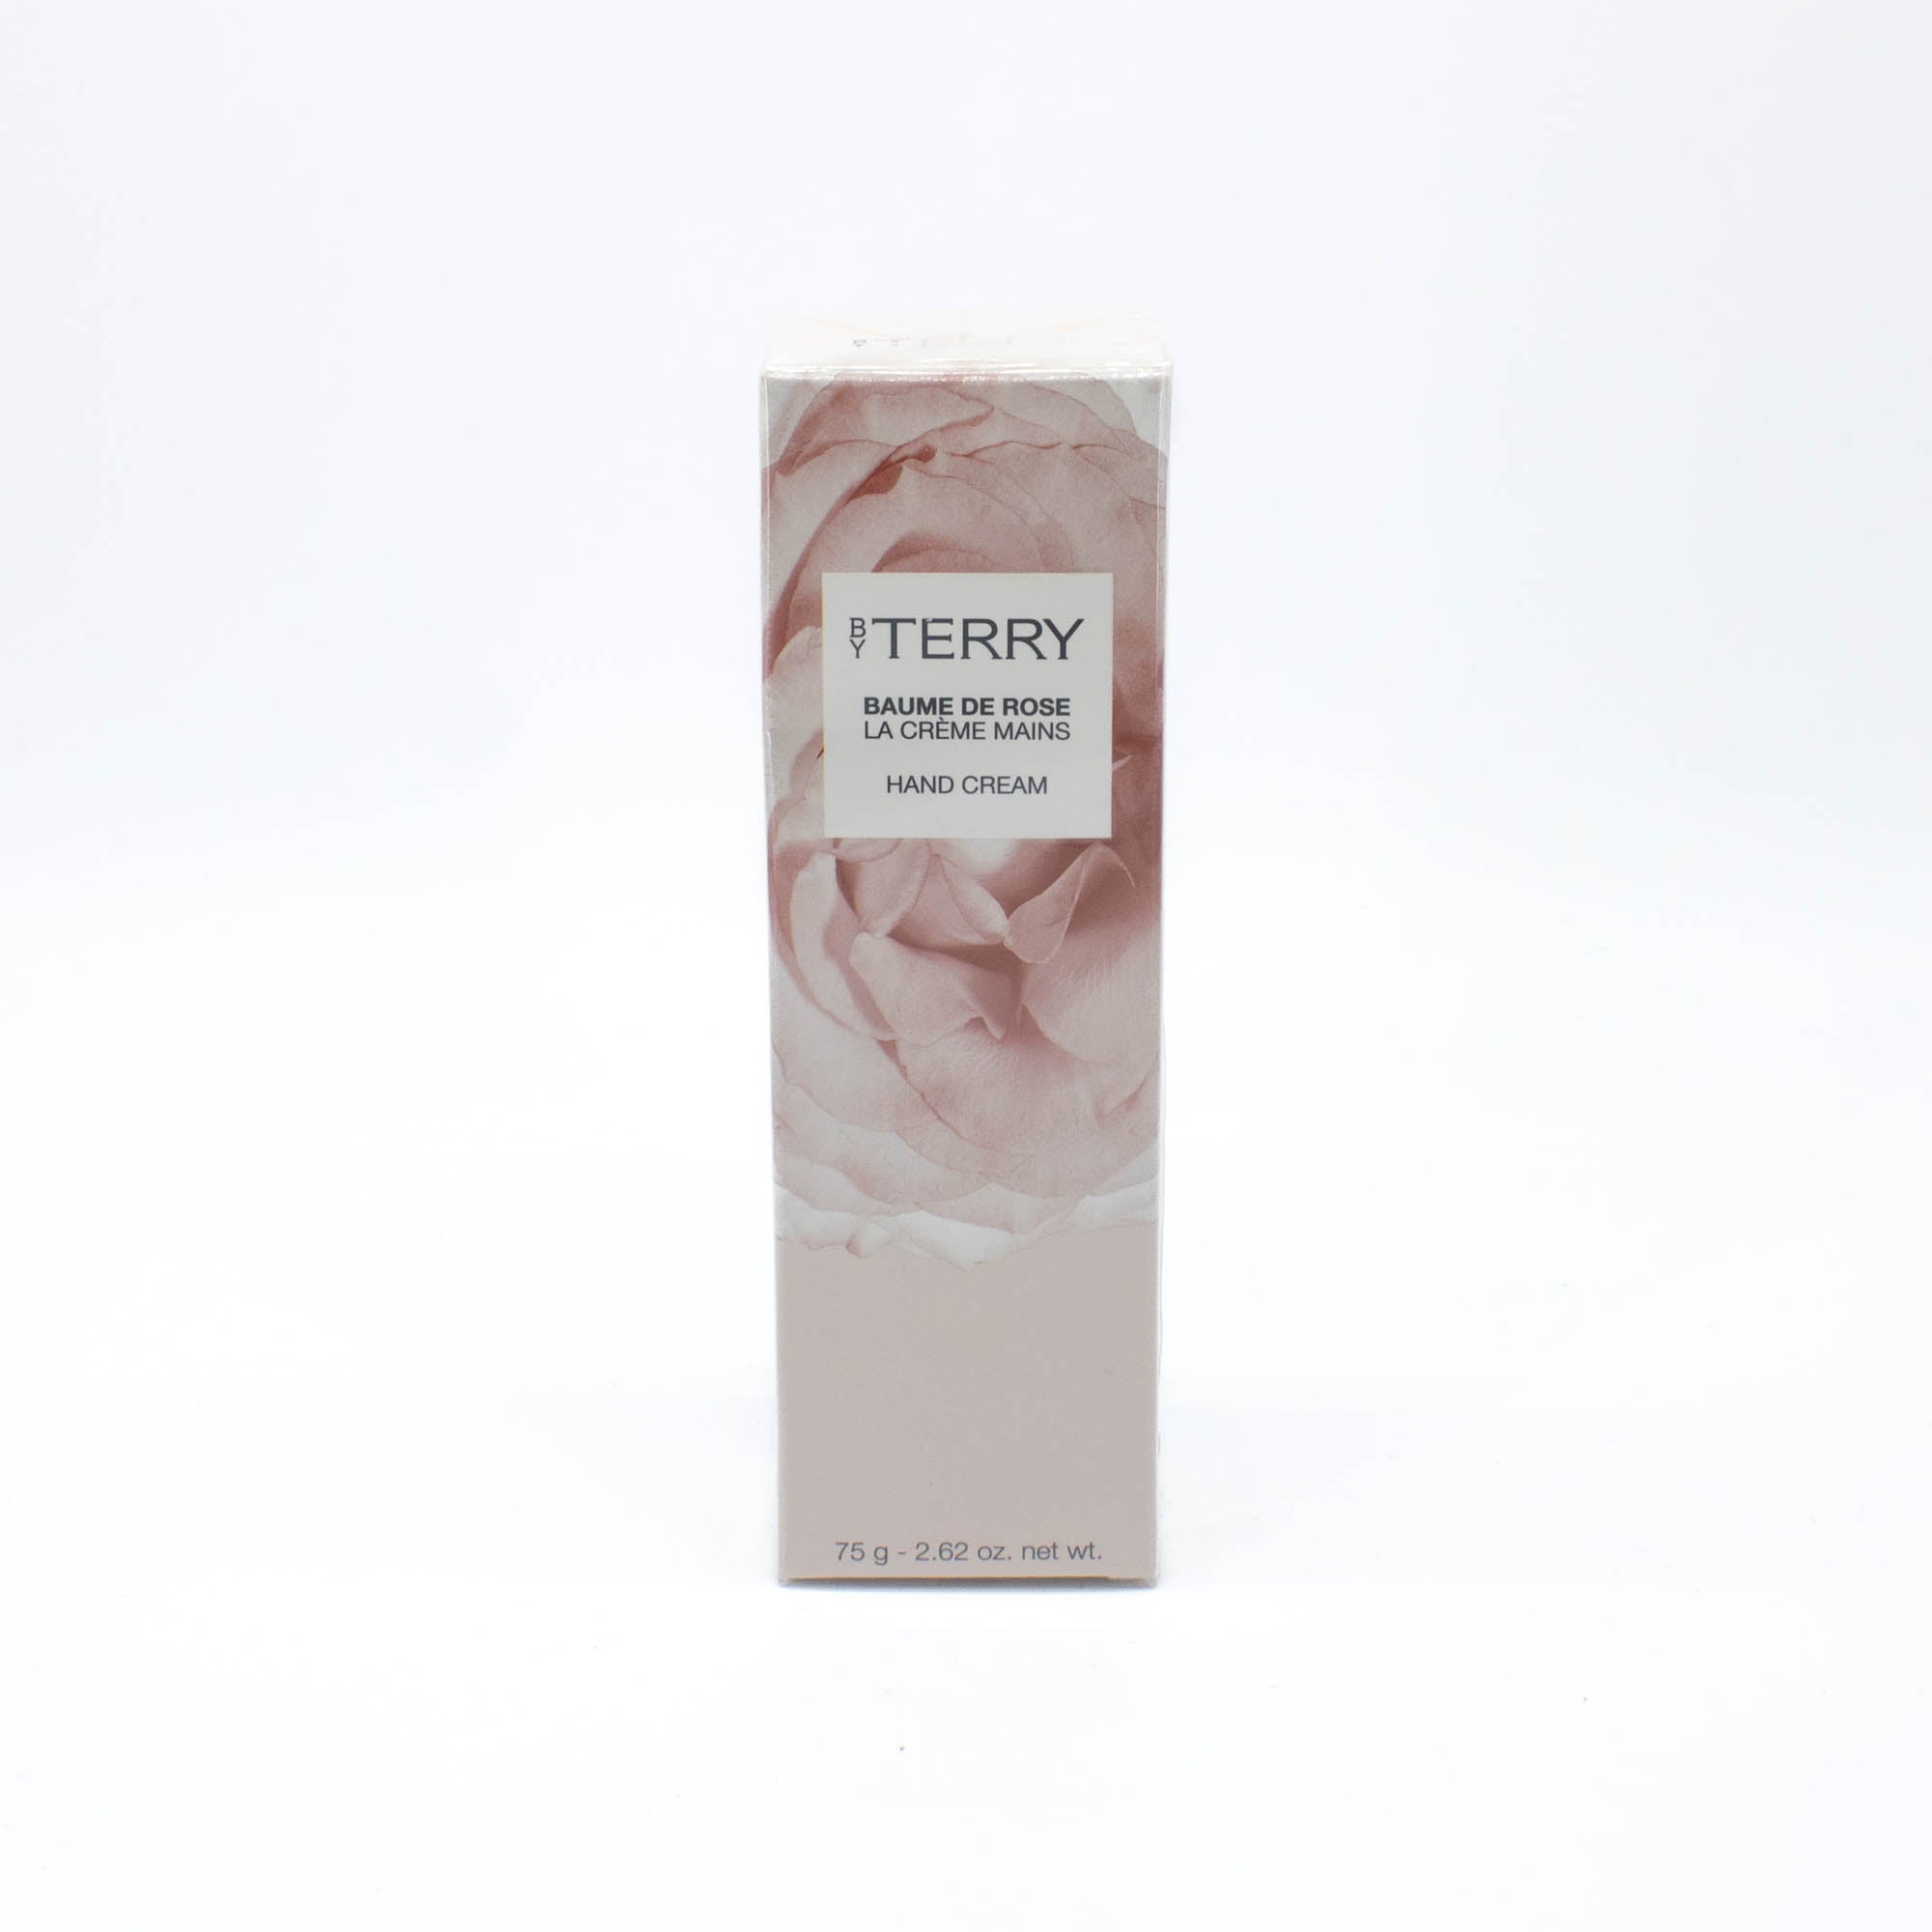 BYTERRY Baume de Rose Hand Cream 2.62oz - Imperfect Box